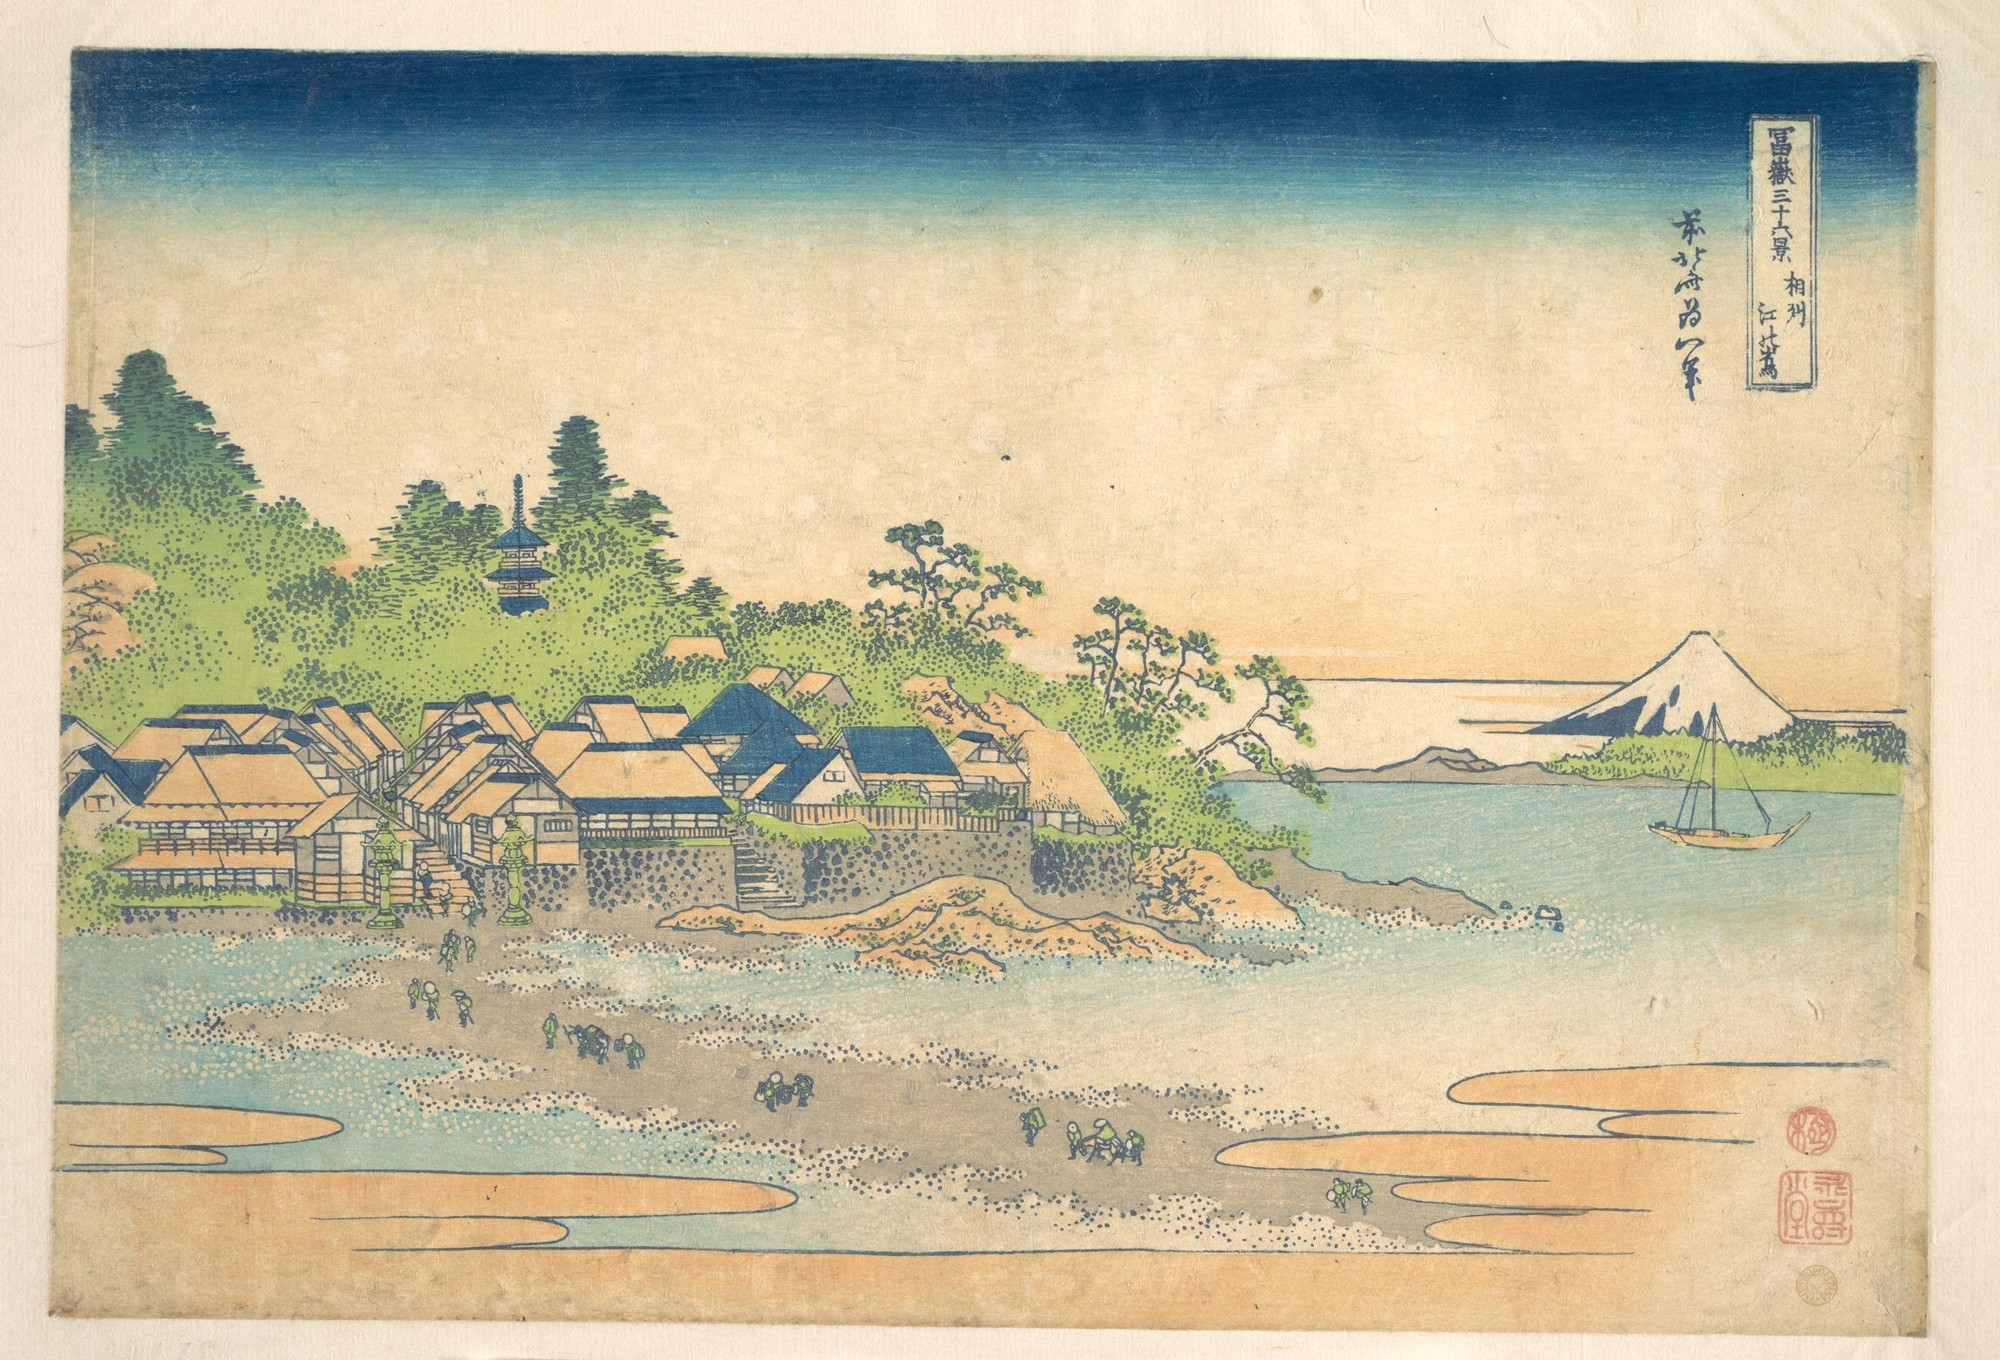 Katsushika Hokusai. Enoshima in Sagami Province, from the series Thirty-six Views of Mount Fuji